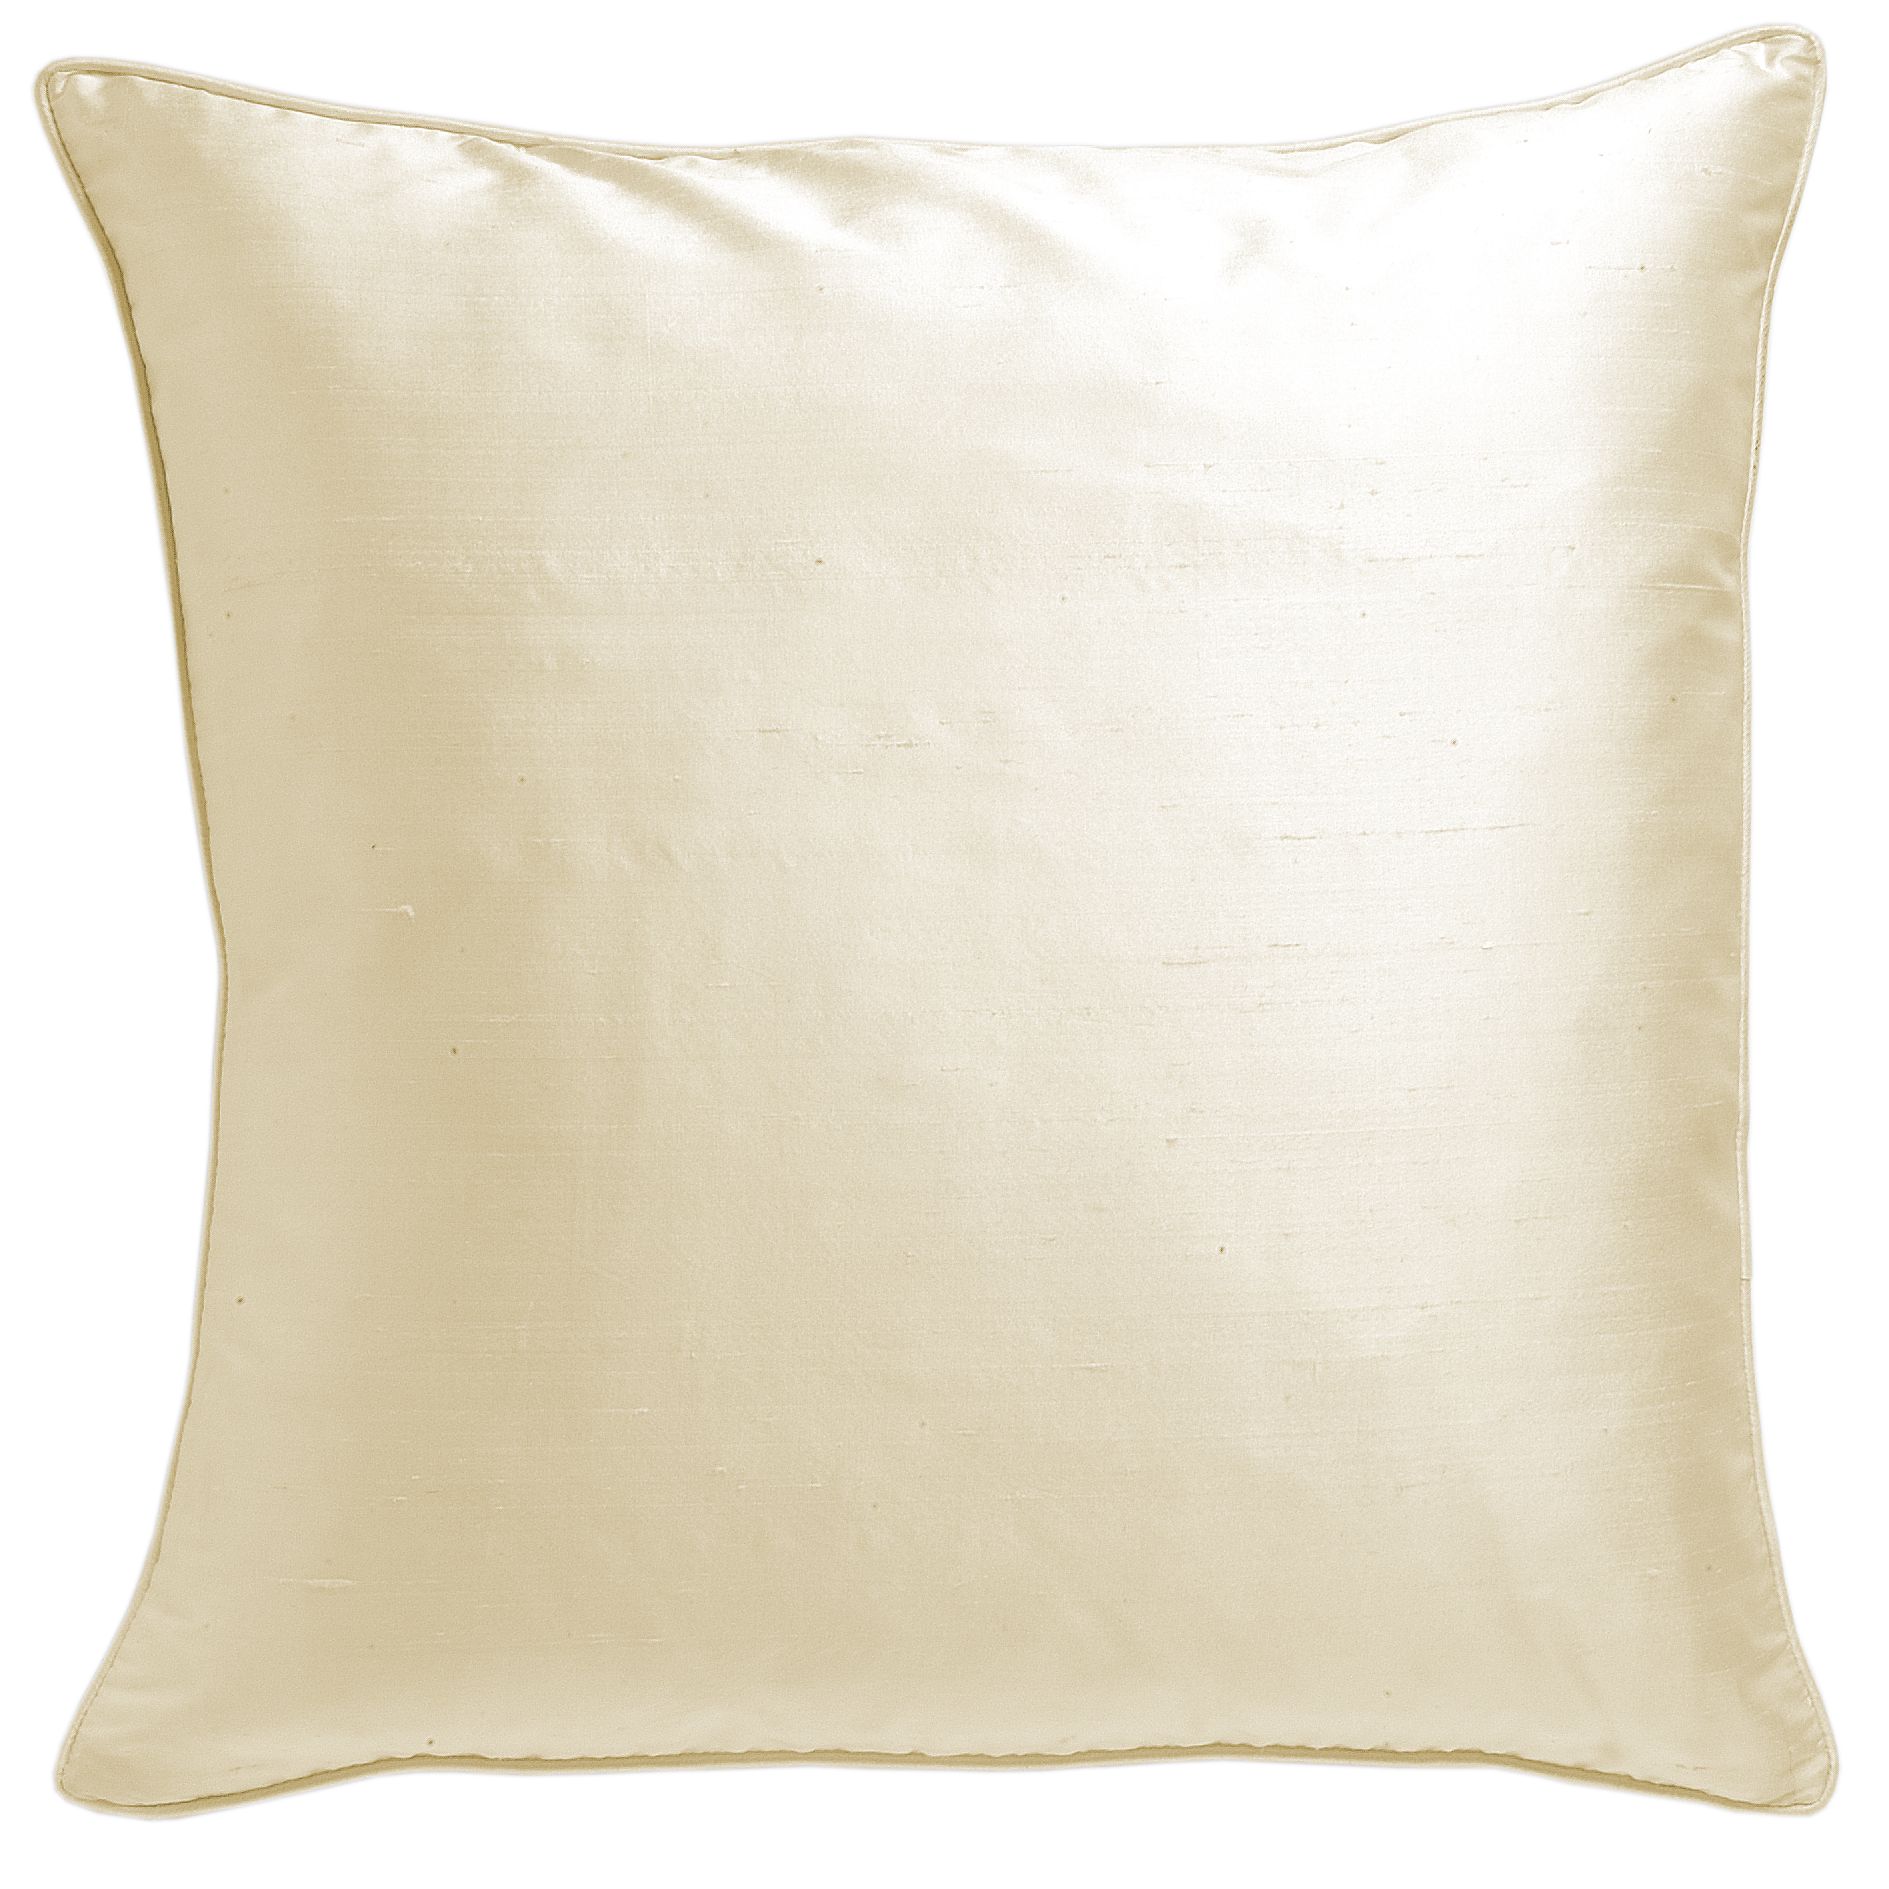 John Lewis & Partners Silk Cushion